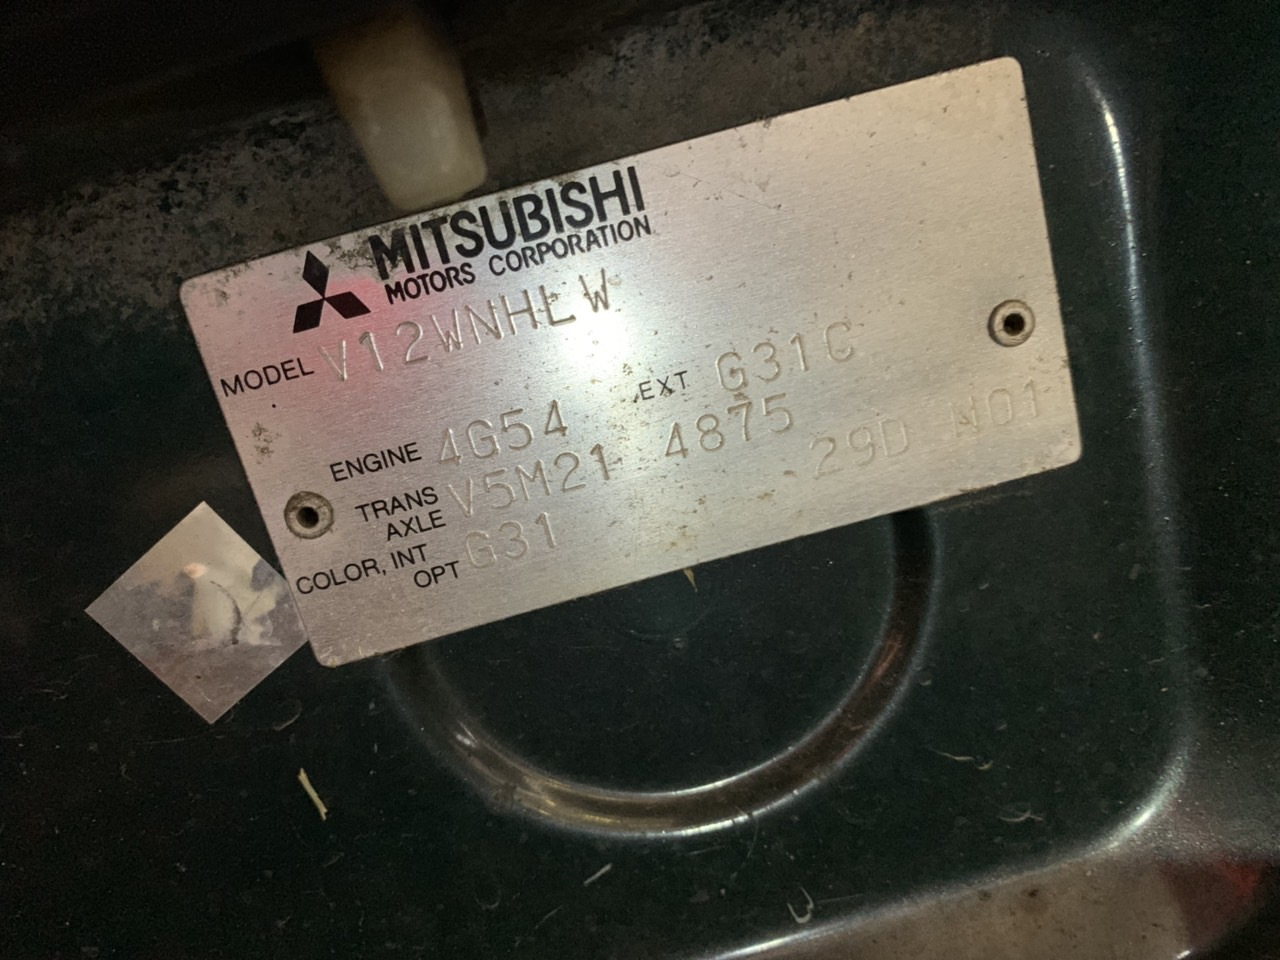 Вин мицубиси. Табличка вин Паджеро спорт 2. Подкапотная табличка Mitsubishi Pajero Sport 2. VIN Mitsubishi Pajero Sport кузов номер. Mitsubishi Pajero номера кузова 1995 г.